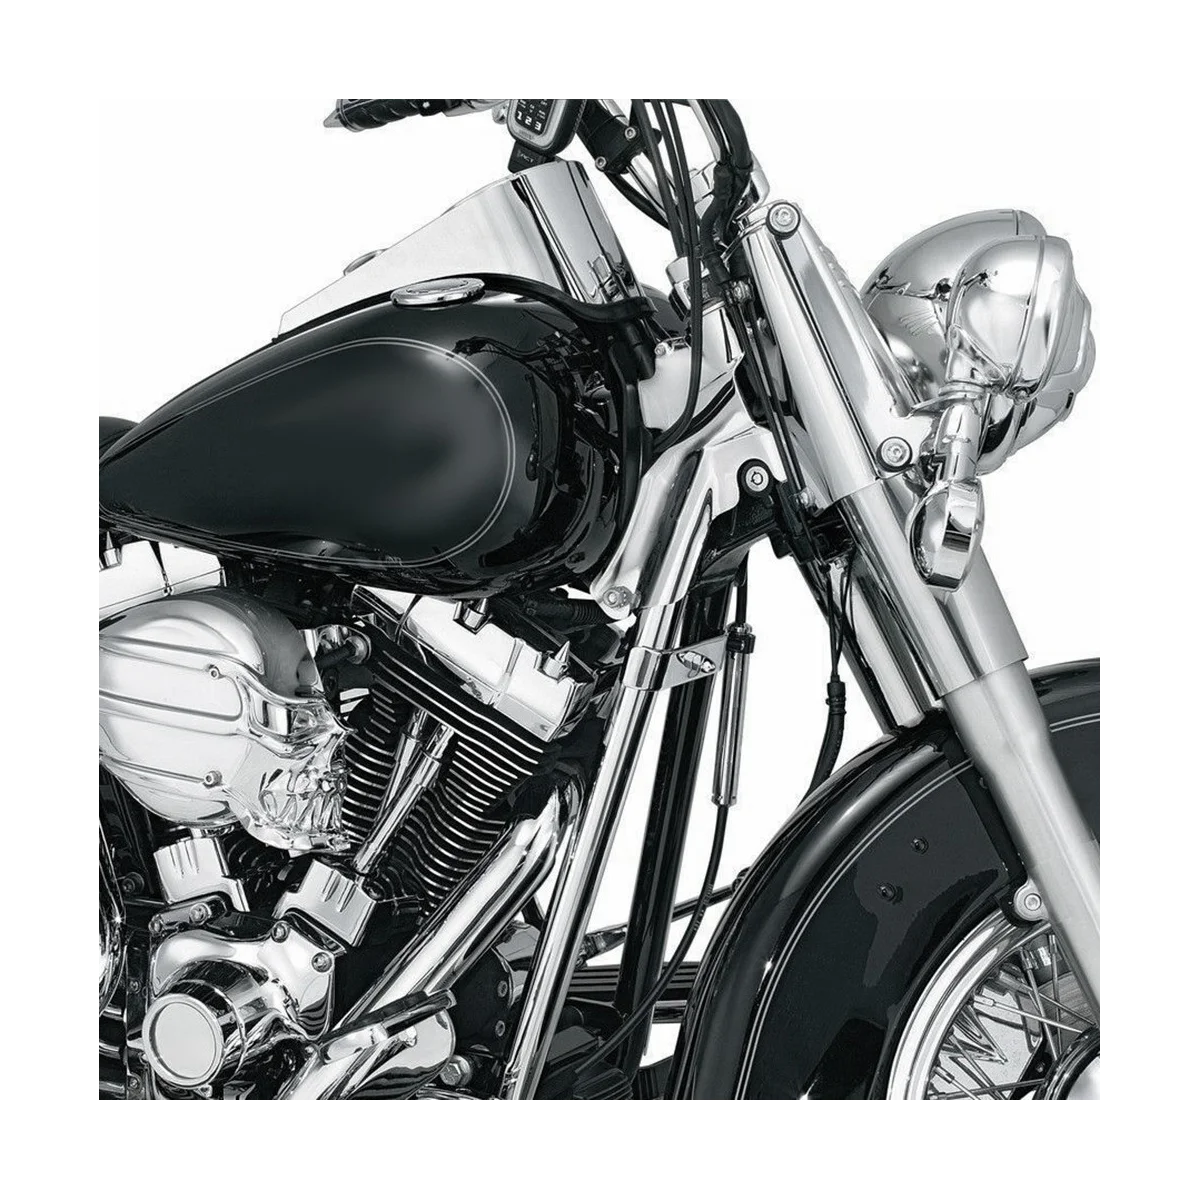 Накладка на нижнюю трубу мотоцикла для моделей Harley Softail Twin Cam 2000-2006 годов, накладка на нижнюю трубу, Черная 3